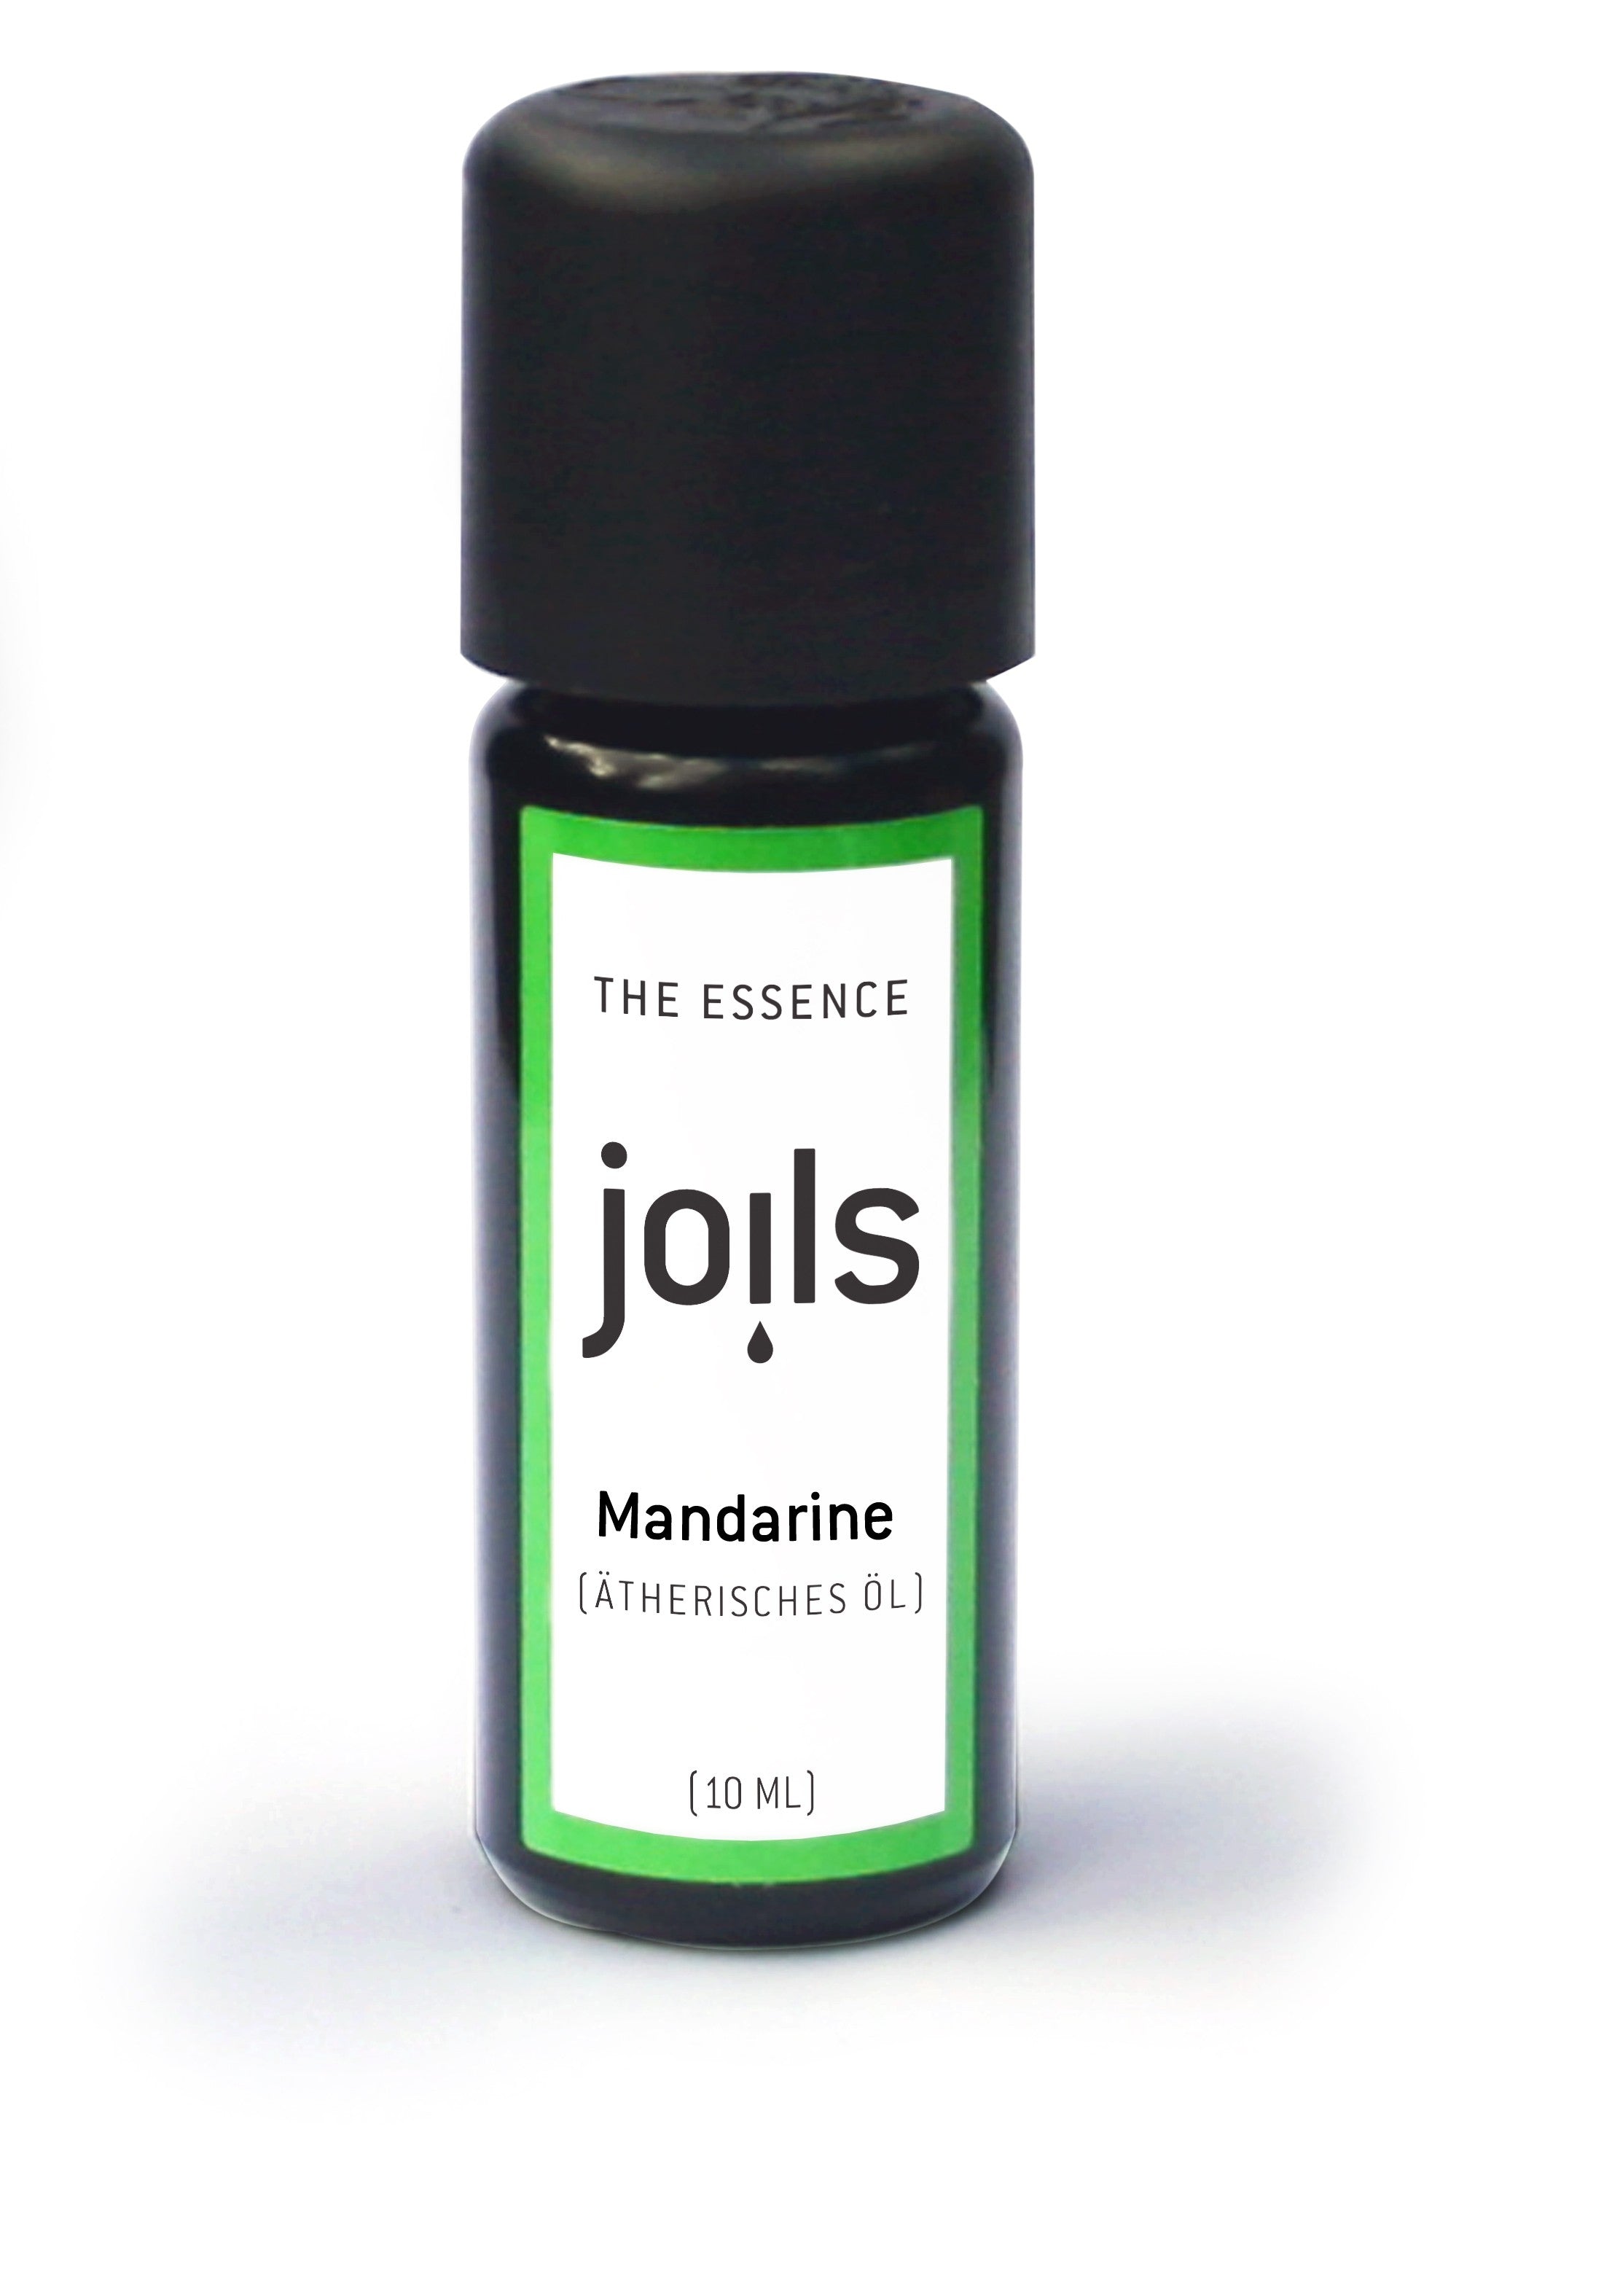 MANDARINE 10ml - Joils